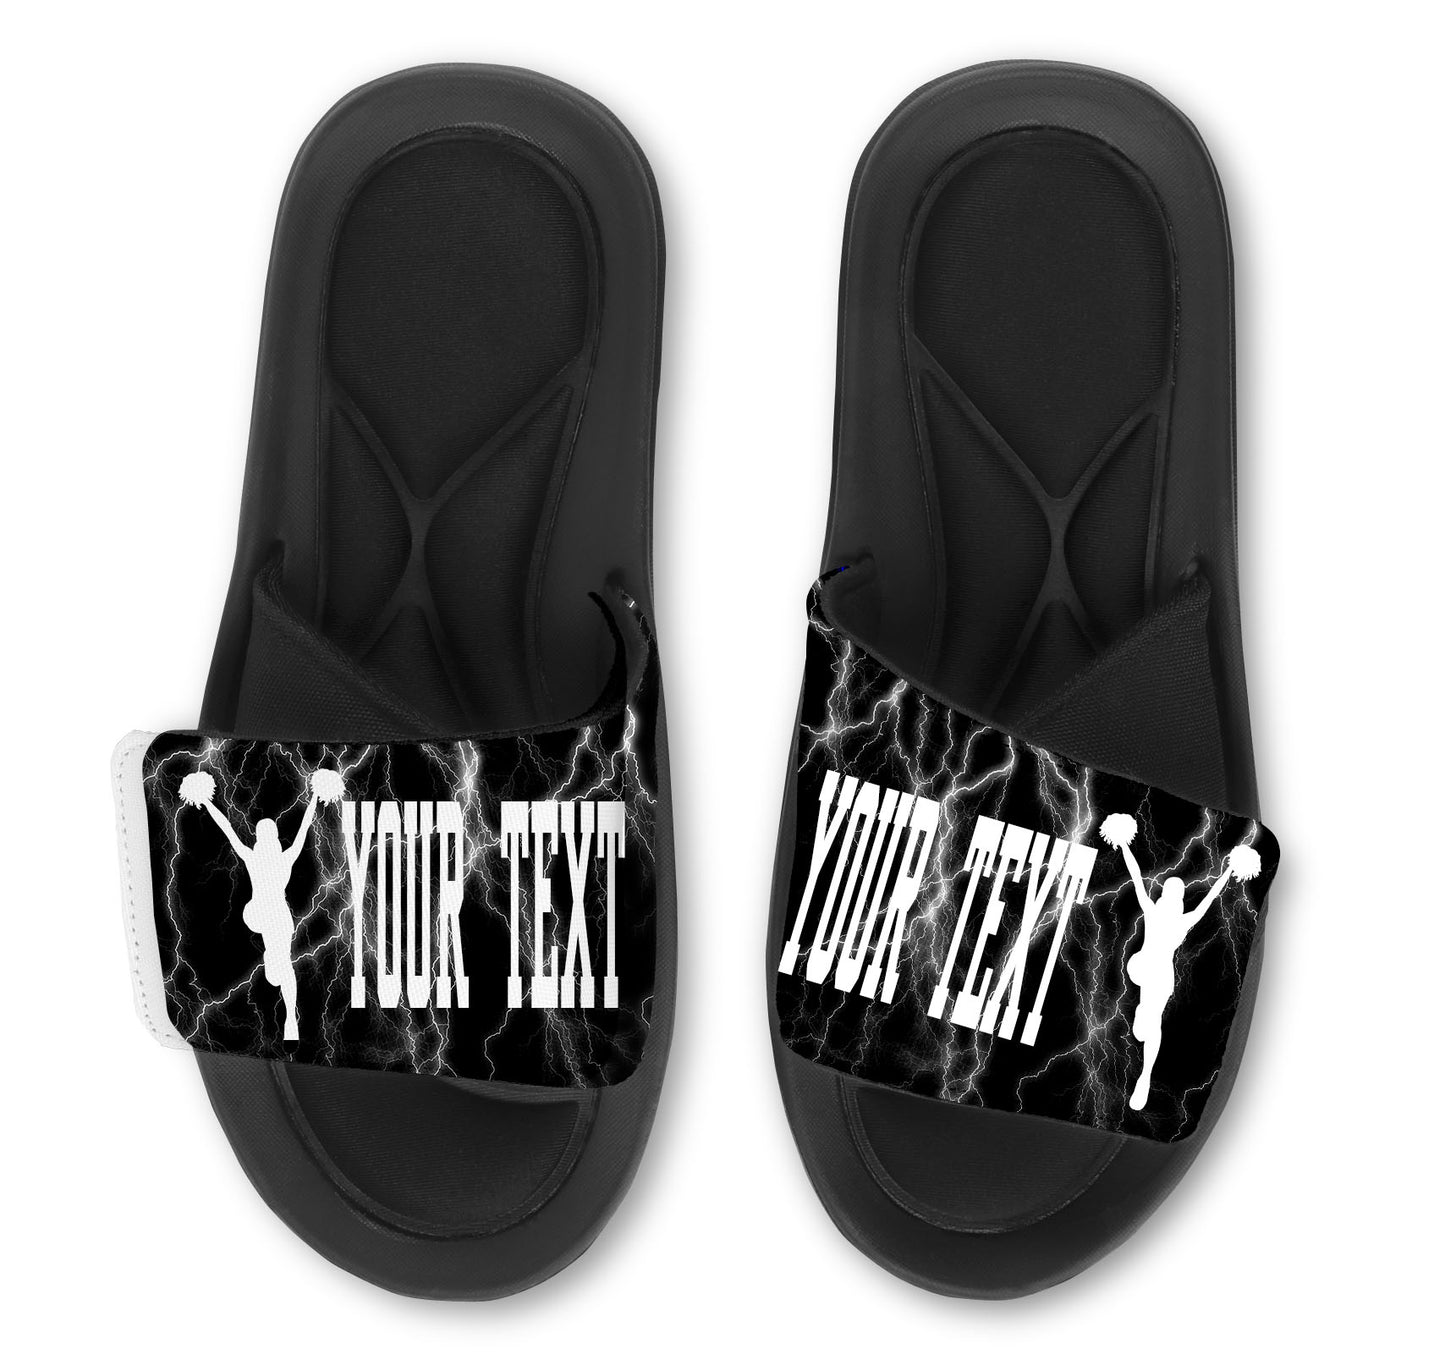 Cheerleader Custom Slides / Sandals with Lightning Design